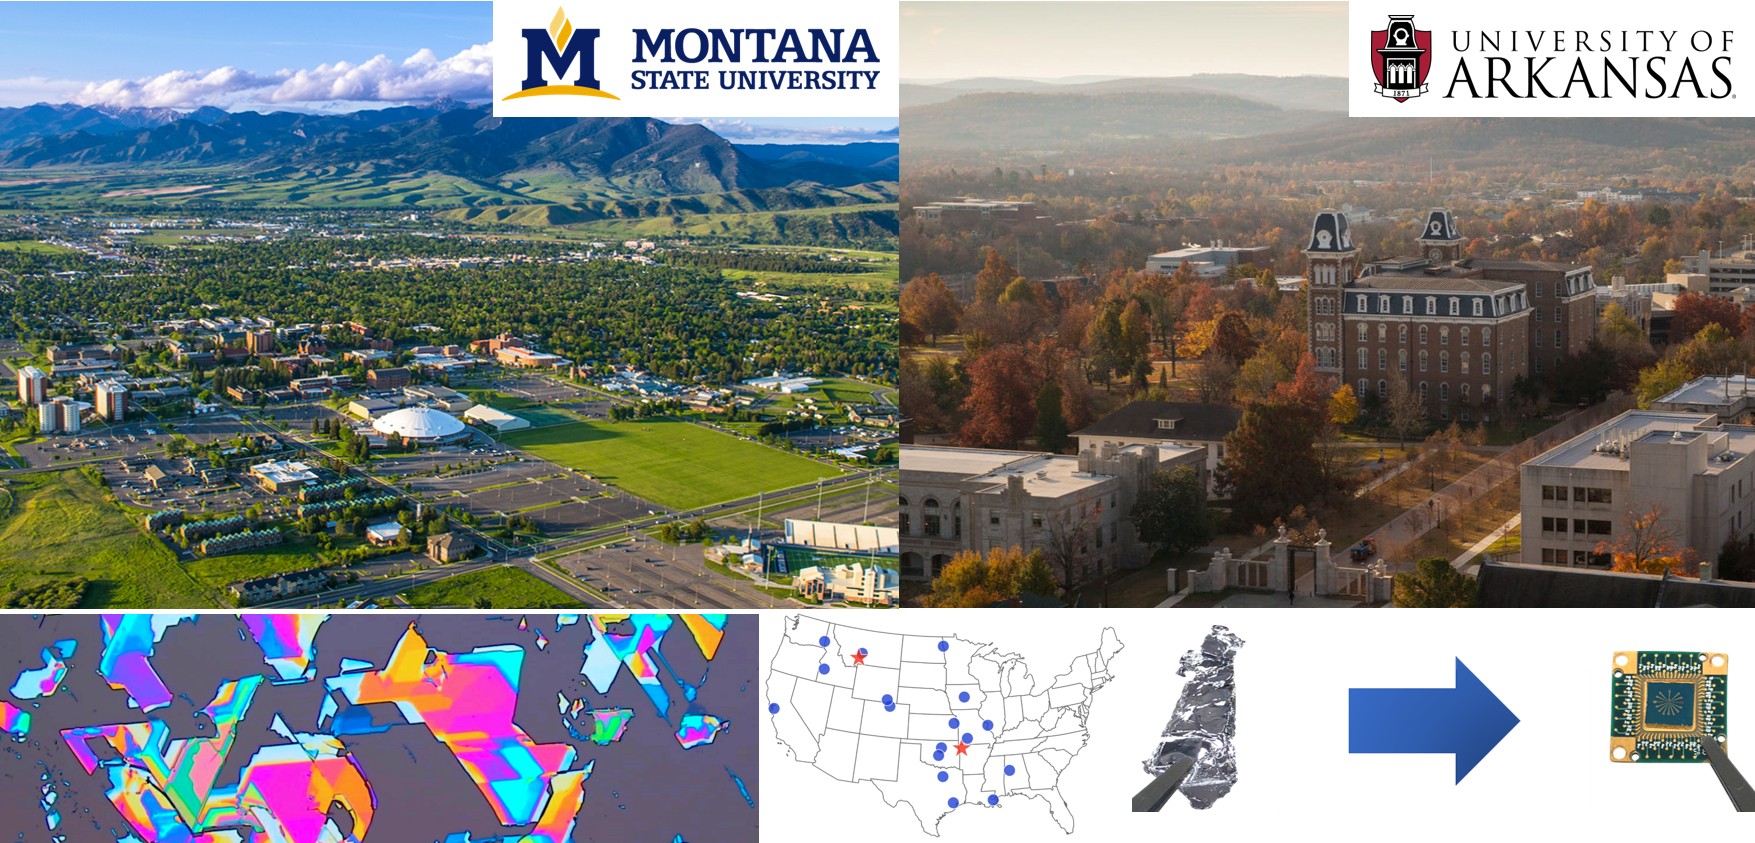 montana state university and the university of arkansas